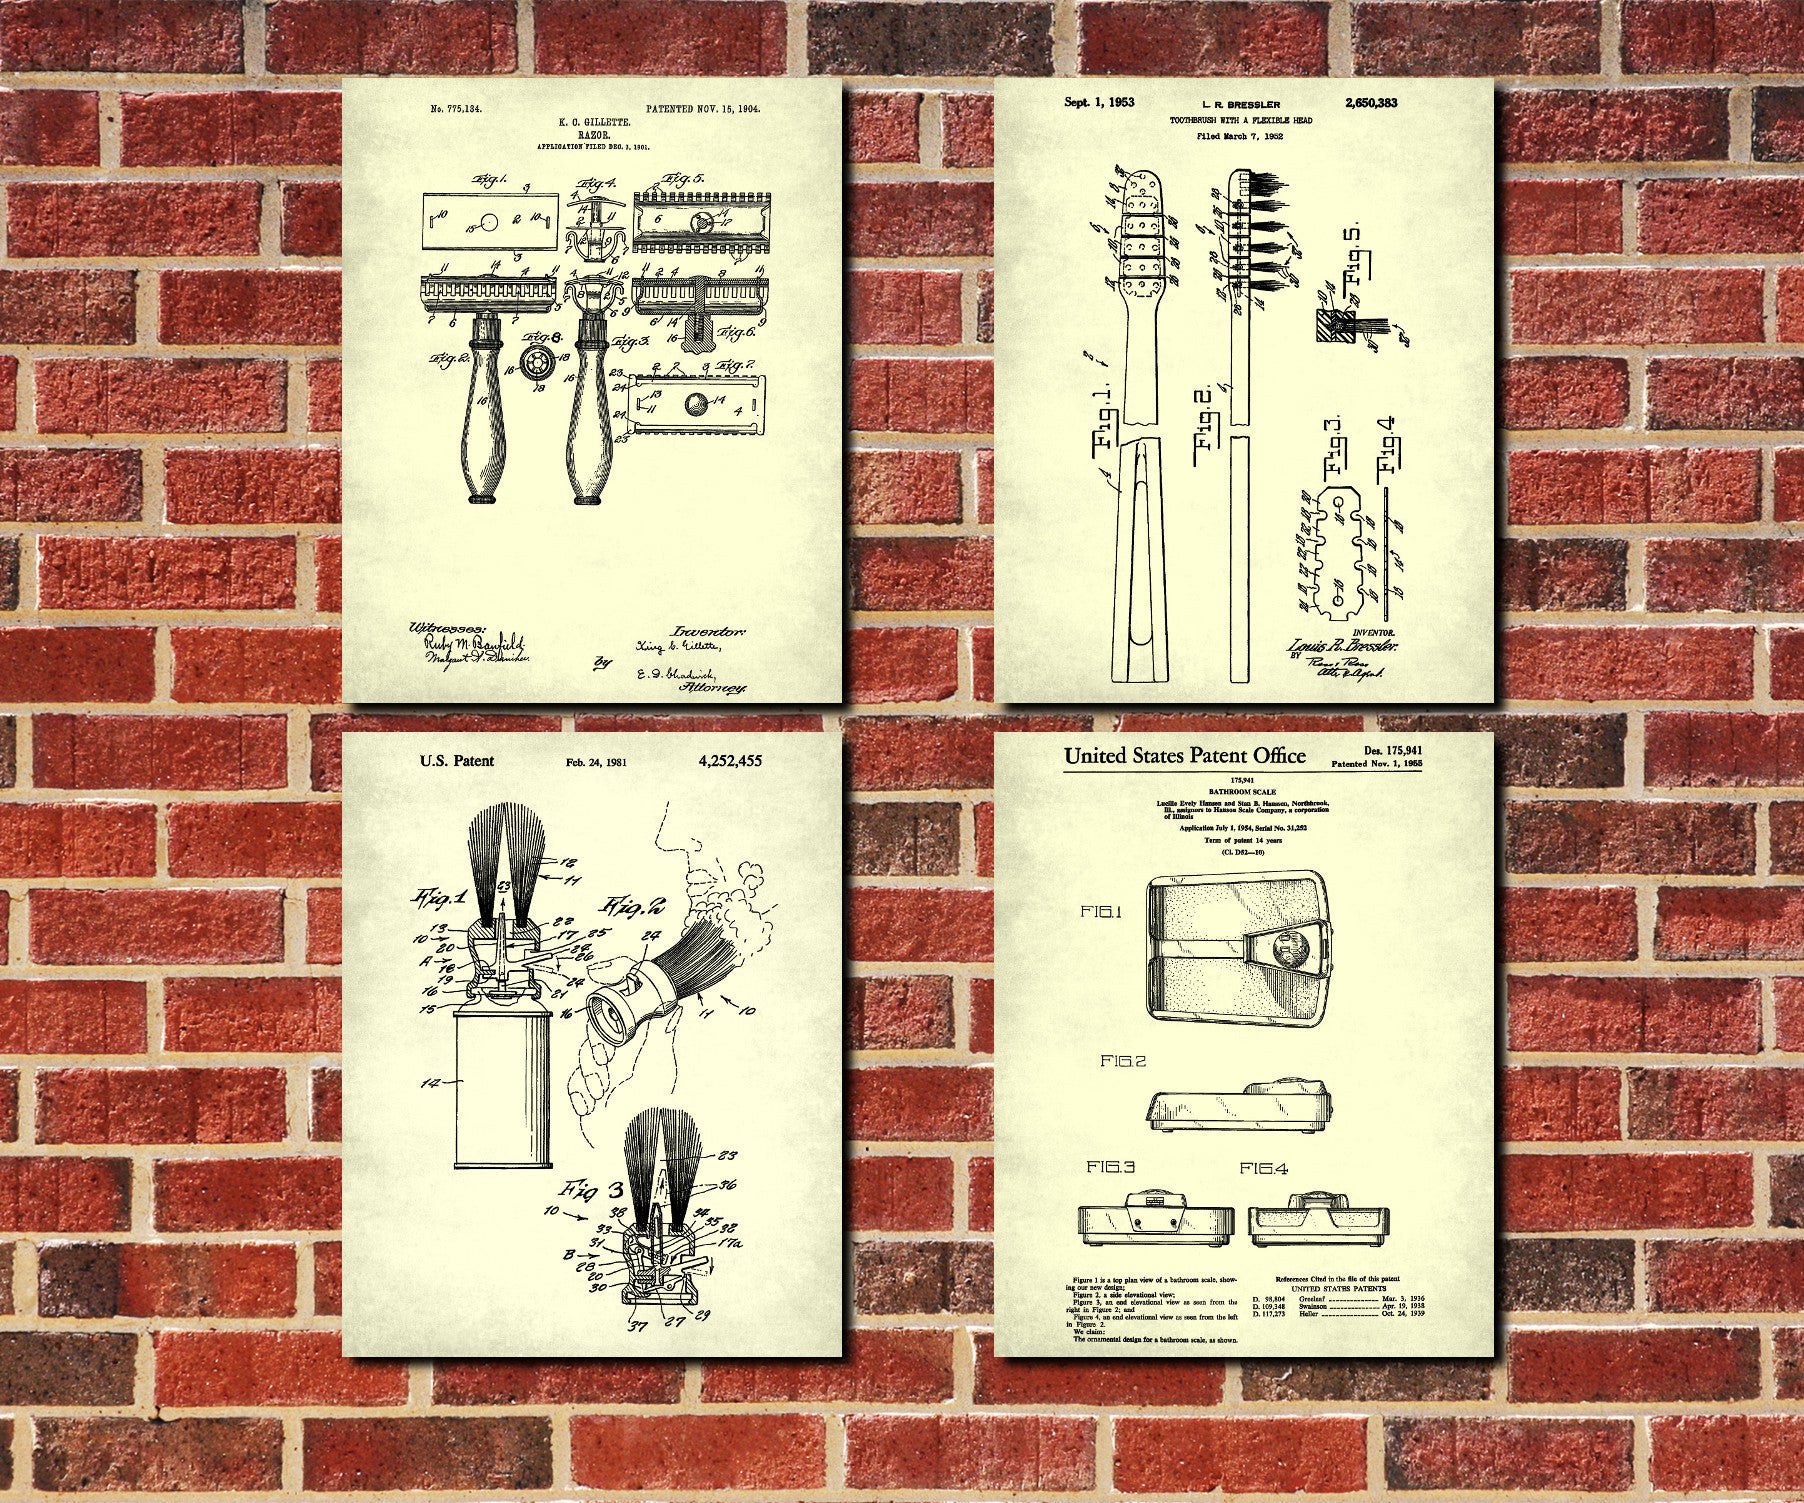 Bathroom Wall Art Set of 4 Patent Prints Bathroom Decor